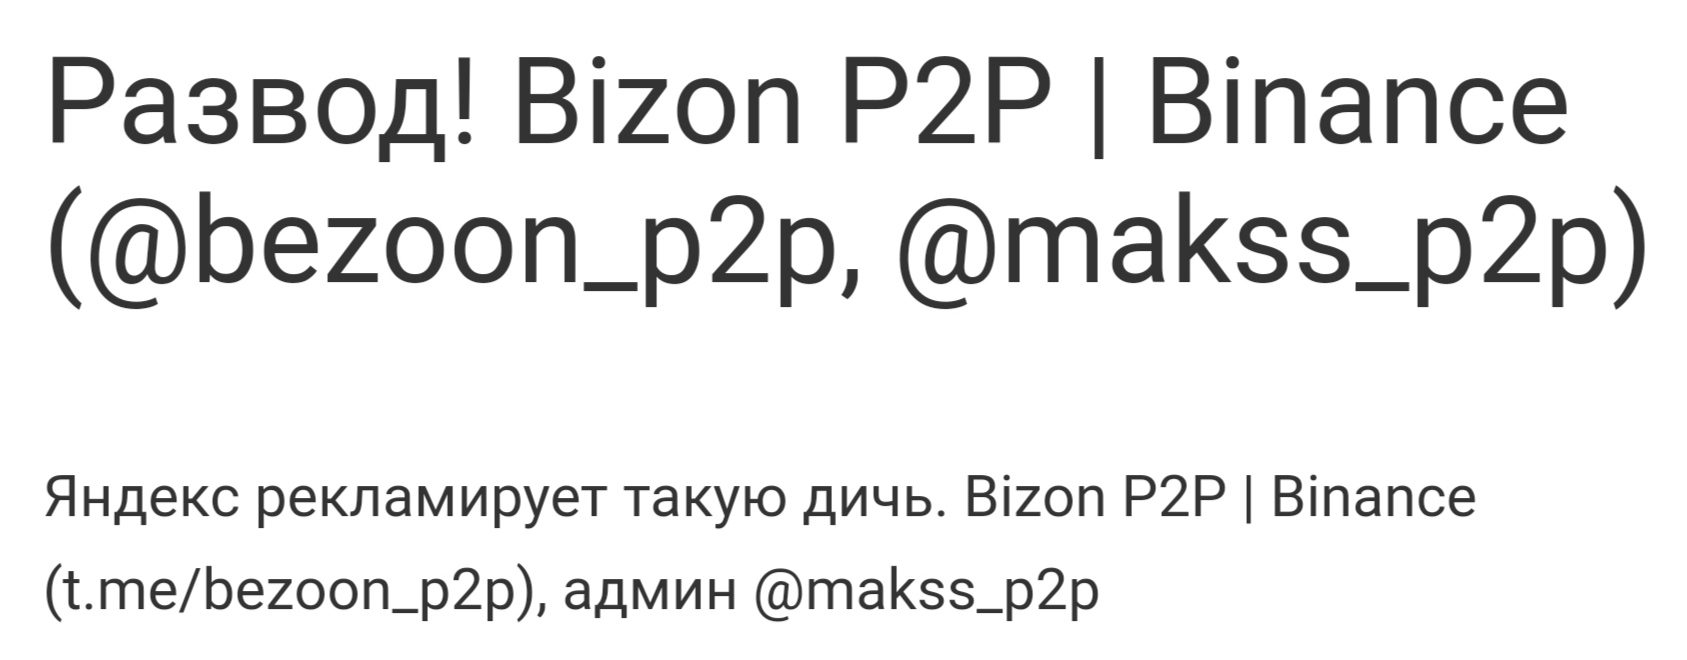 Bizon P2P Binance отзывы